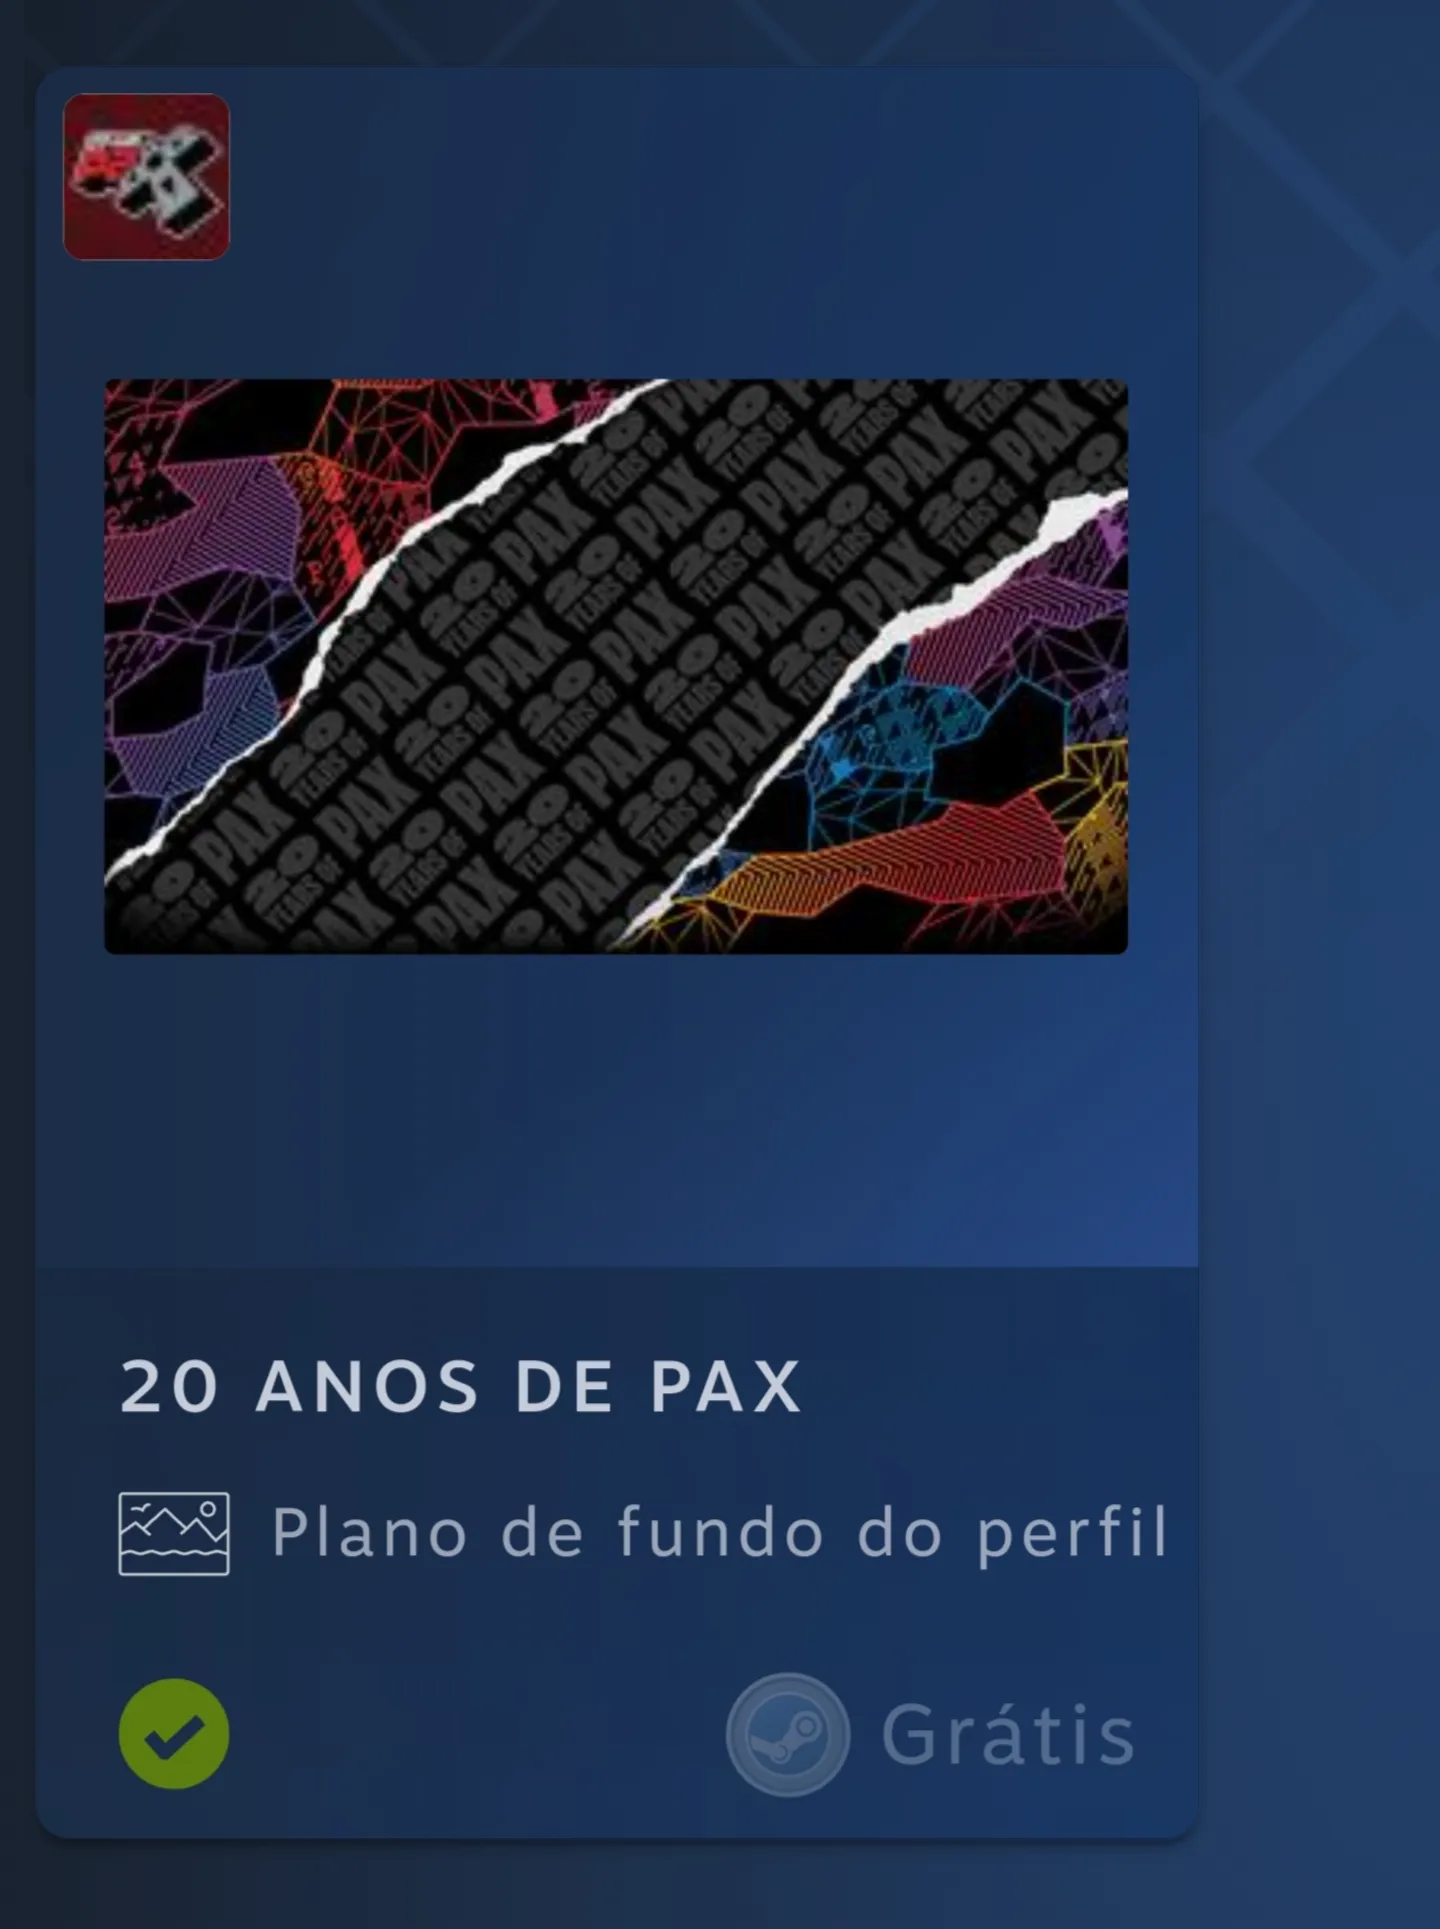 [Grtis] Steam Plano De Fundo Pax